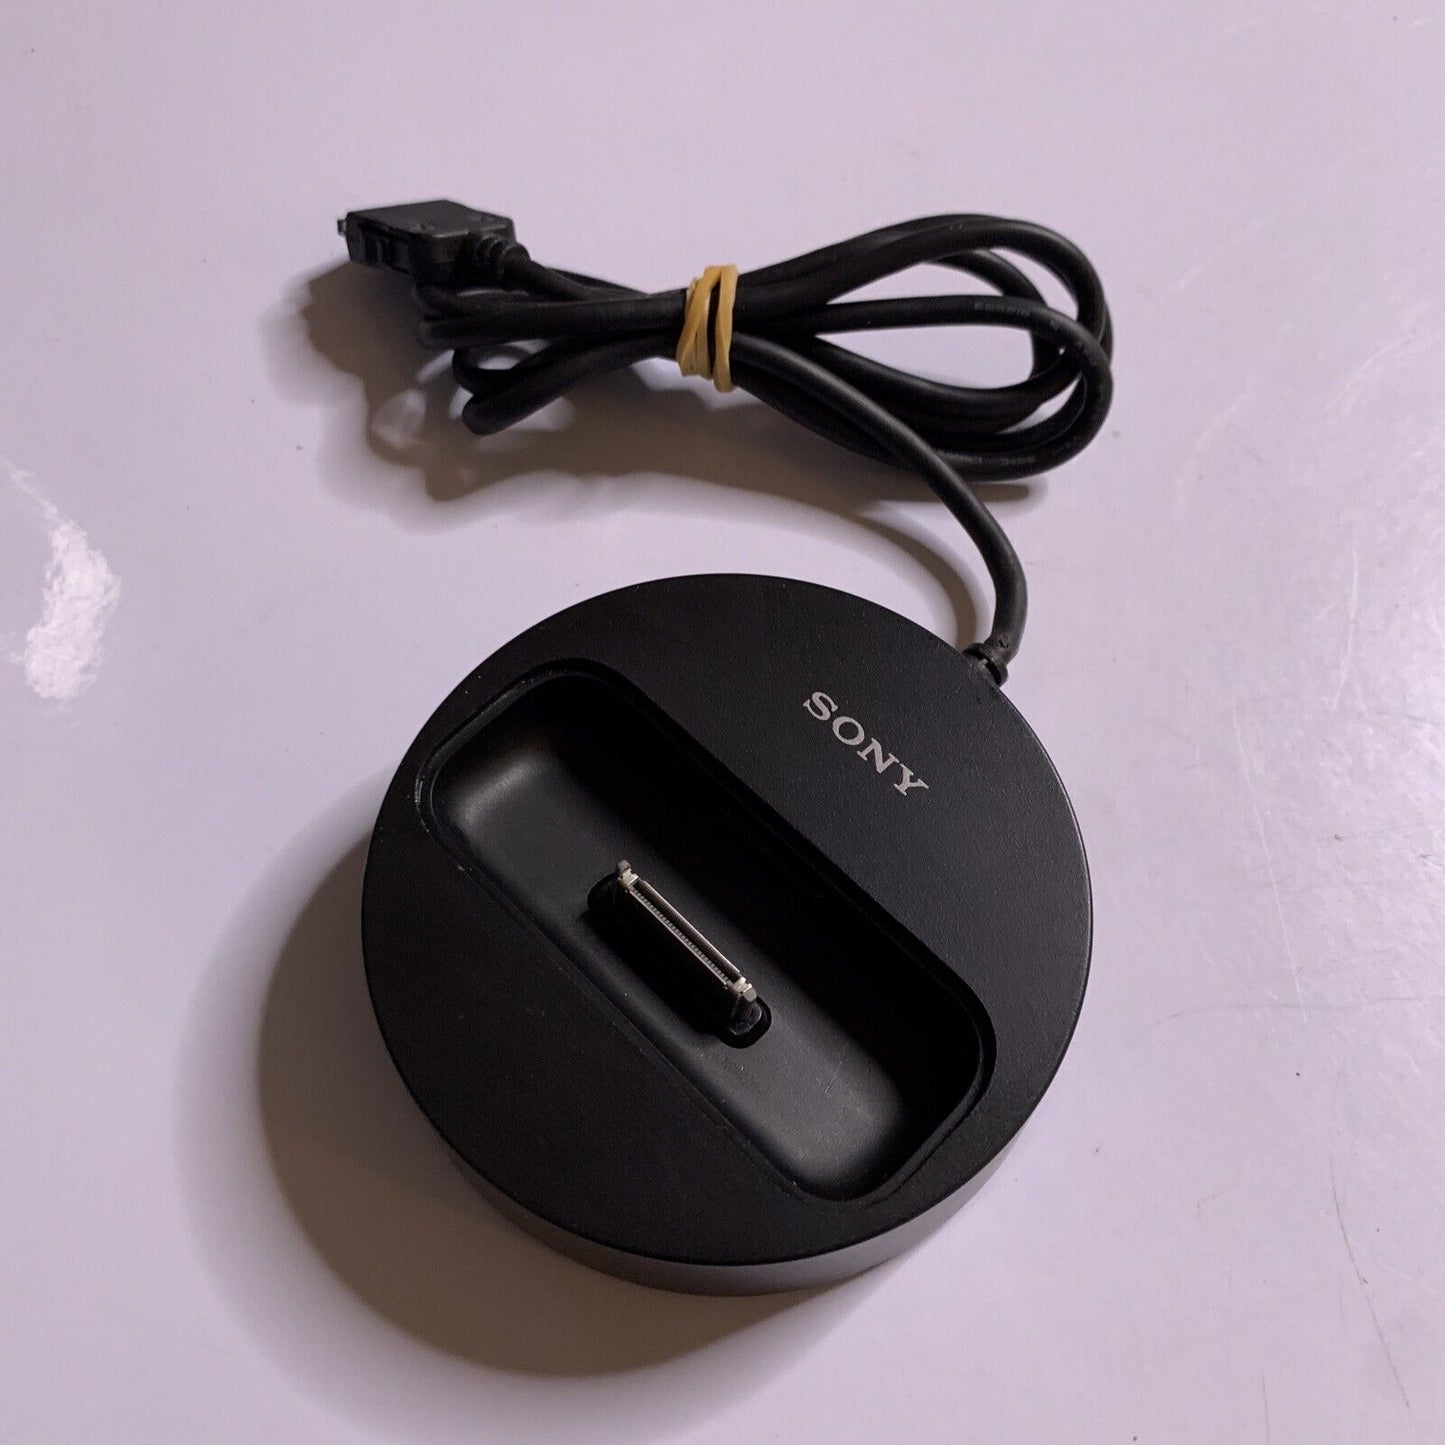 Sony Digital Media Port Adapter TDM-iP10 30-pin Apple Connector for Sony Hi-Fi